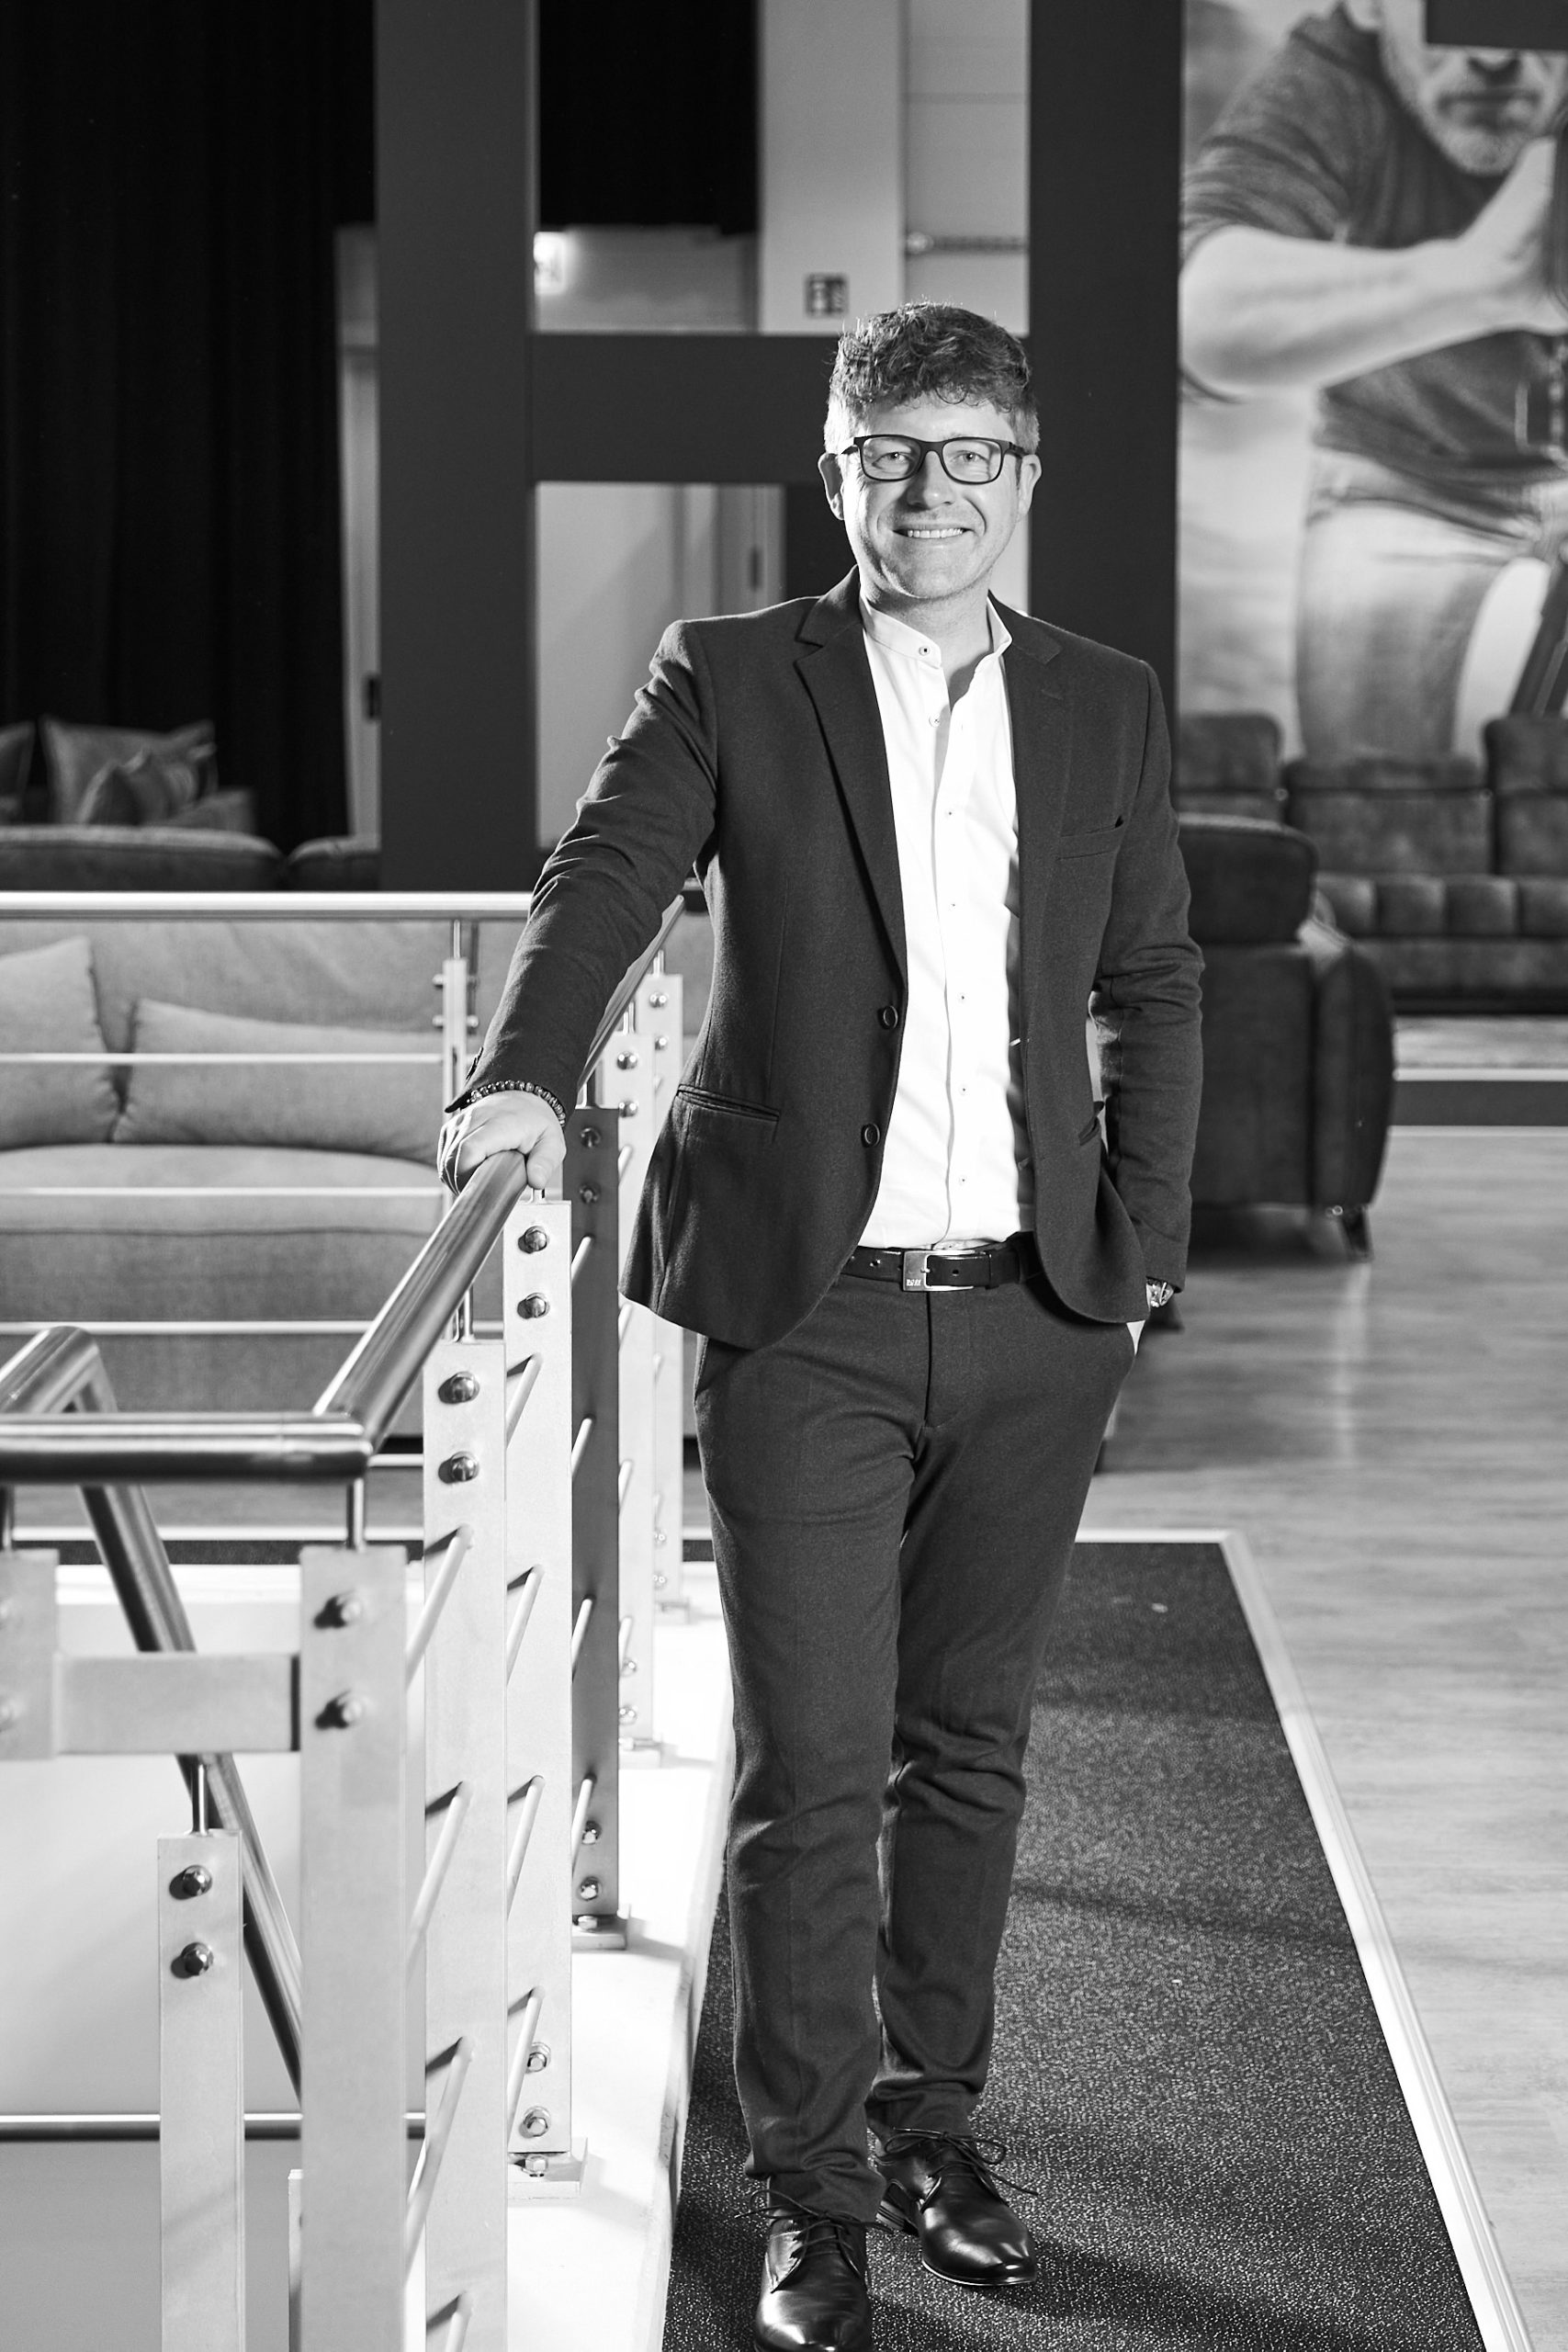 Shareholder and CEO Thorsten Hilpert